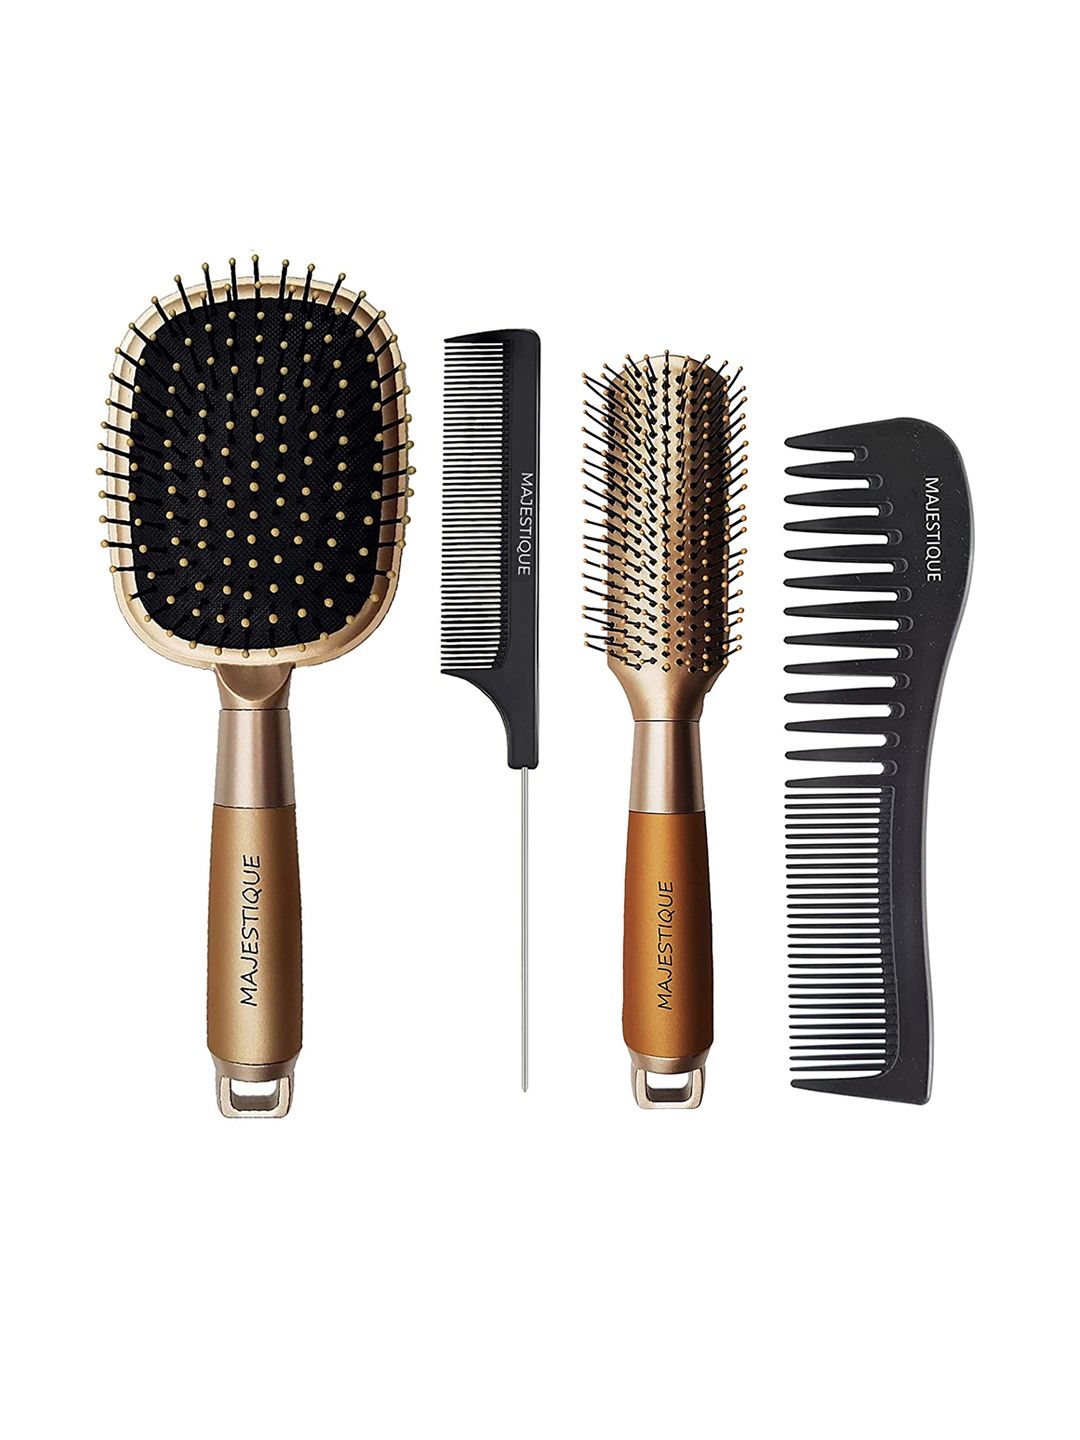 MAJESTIQUE Perfect Hair Care Brush Set Price in India